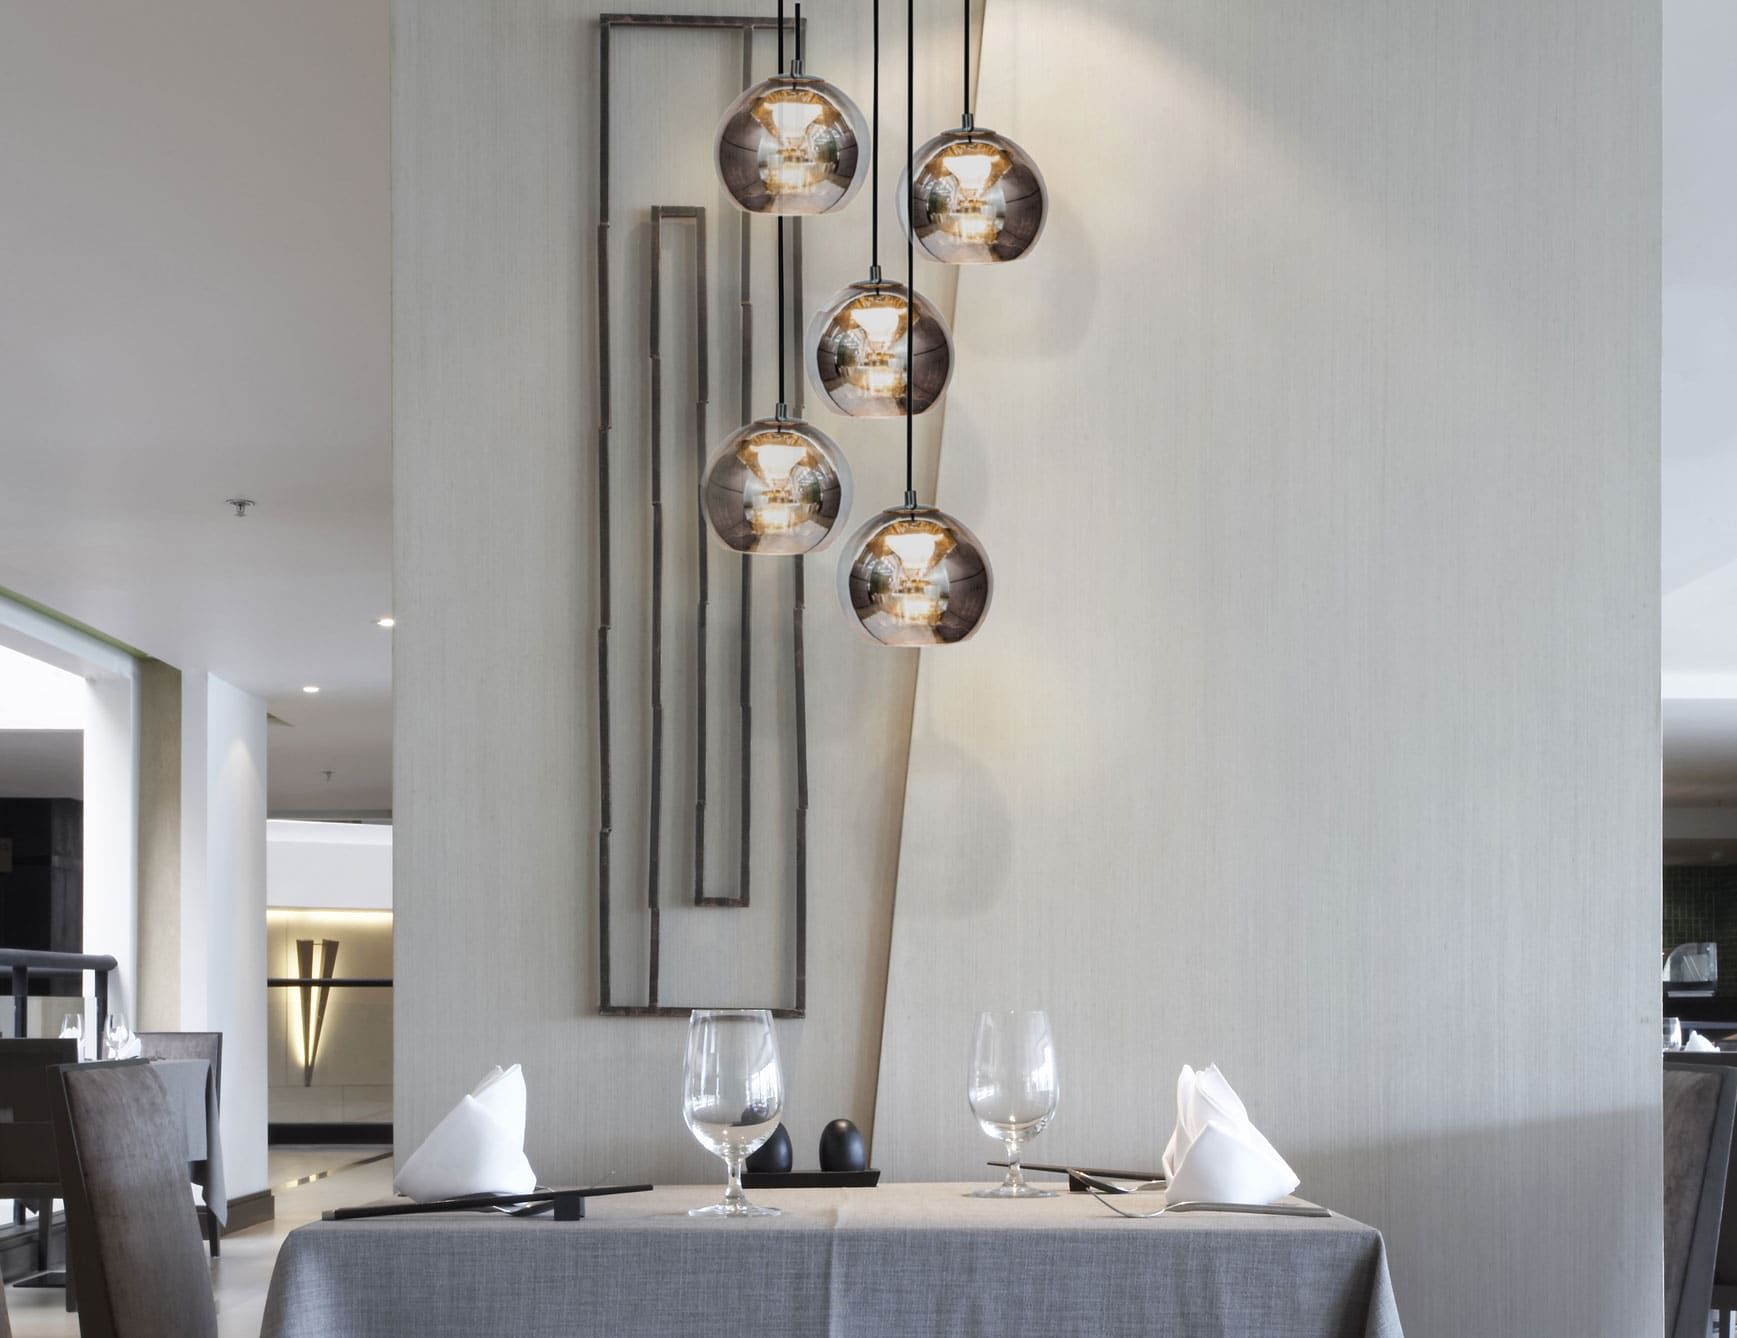 Kubric contemporary Italian hanging light with chrome metal